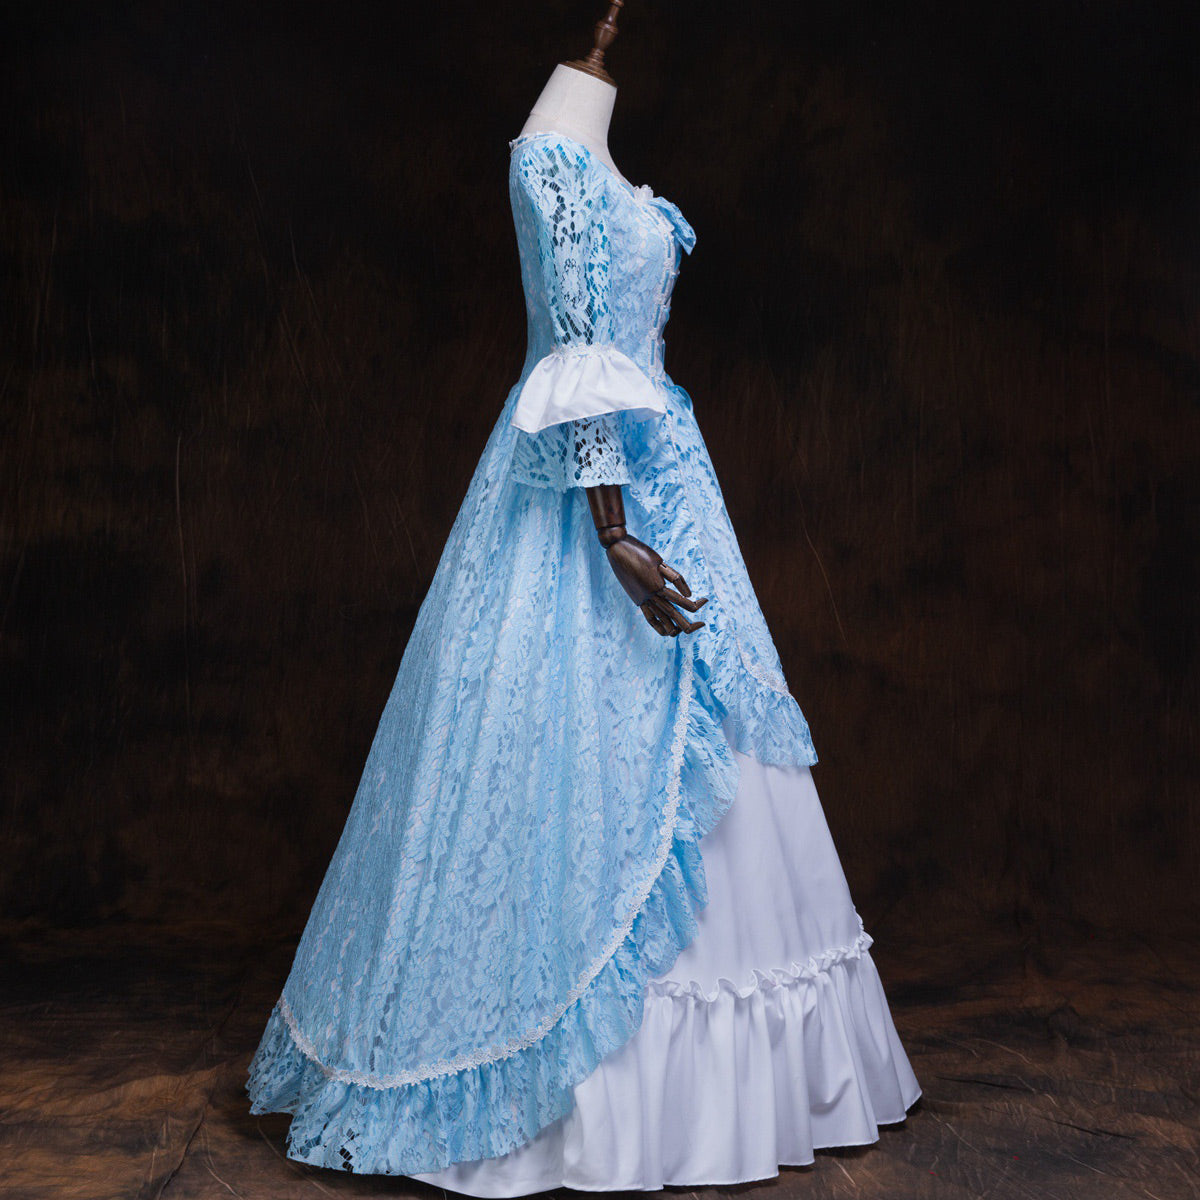 Victorian Edwardian Vintage Blue Lace Dress Theater Costume